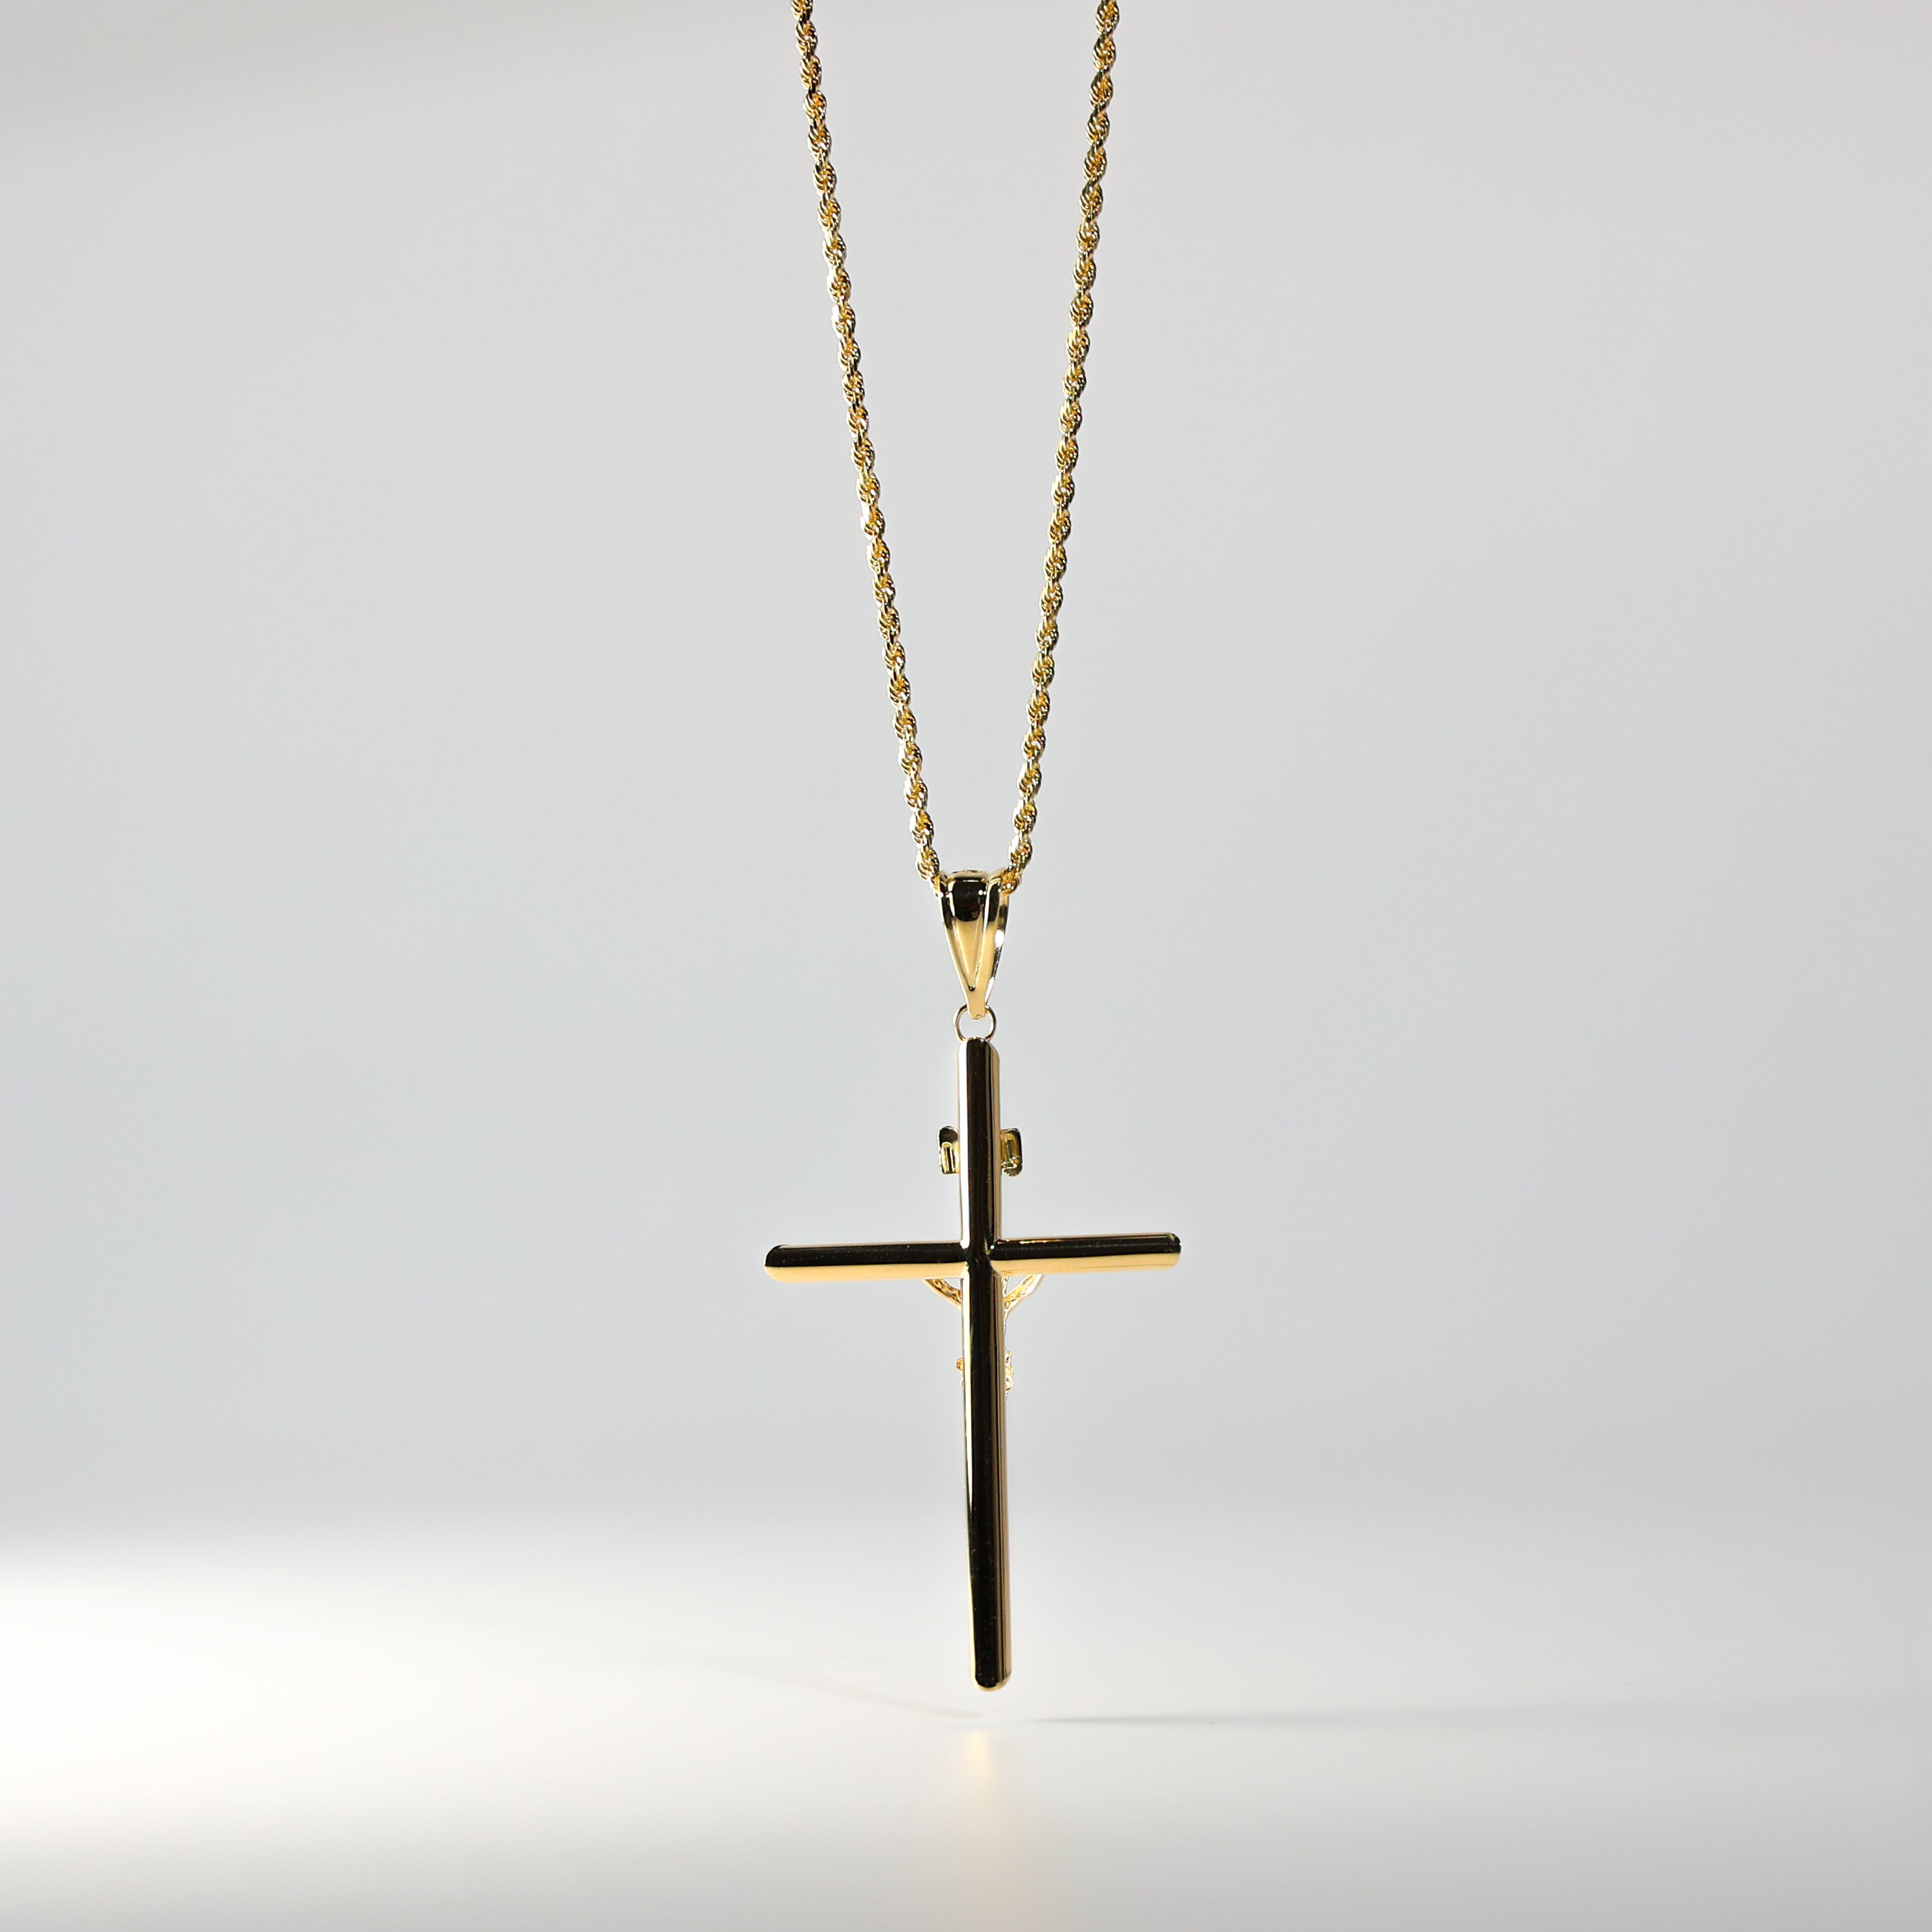 Gold Crucifix Cross Pendant Model-0838 - Charlie & Co. Jewelry